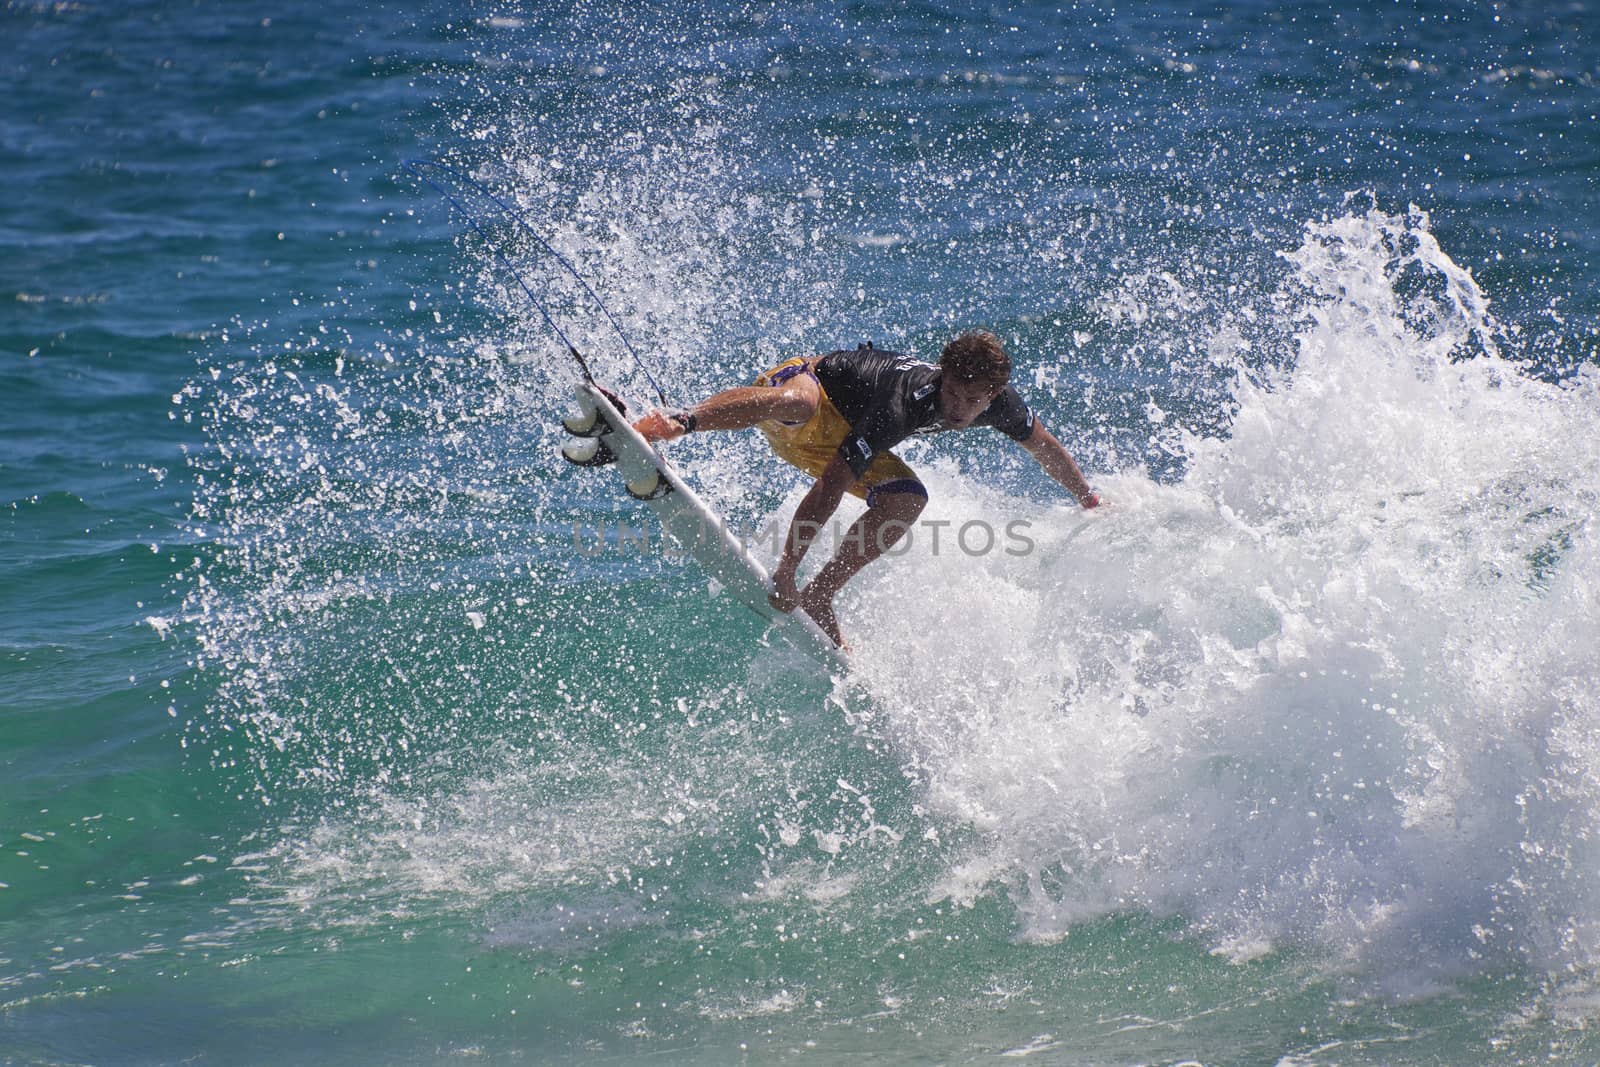 Surfer races the Quiksilver & Roxy Pro World Title Event. by Imagecom